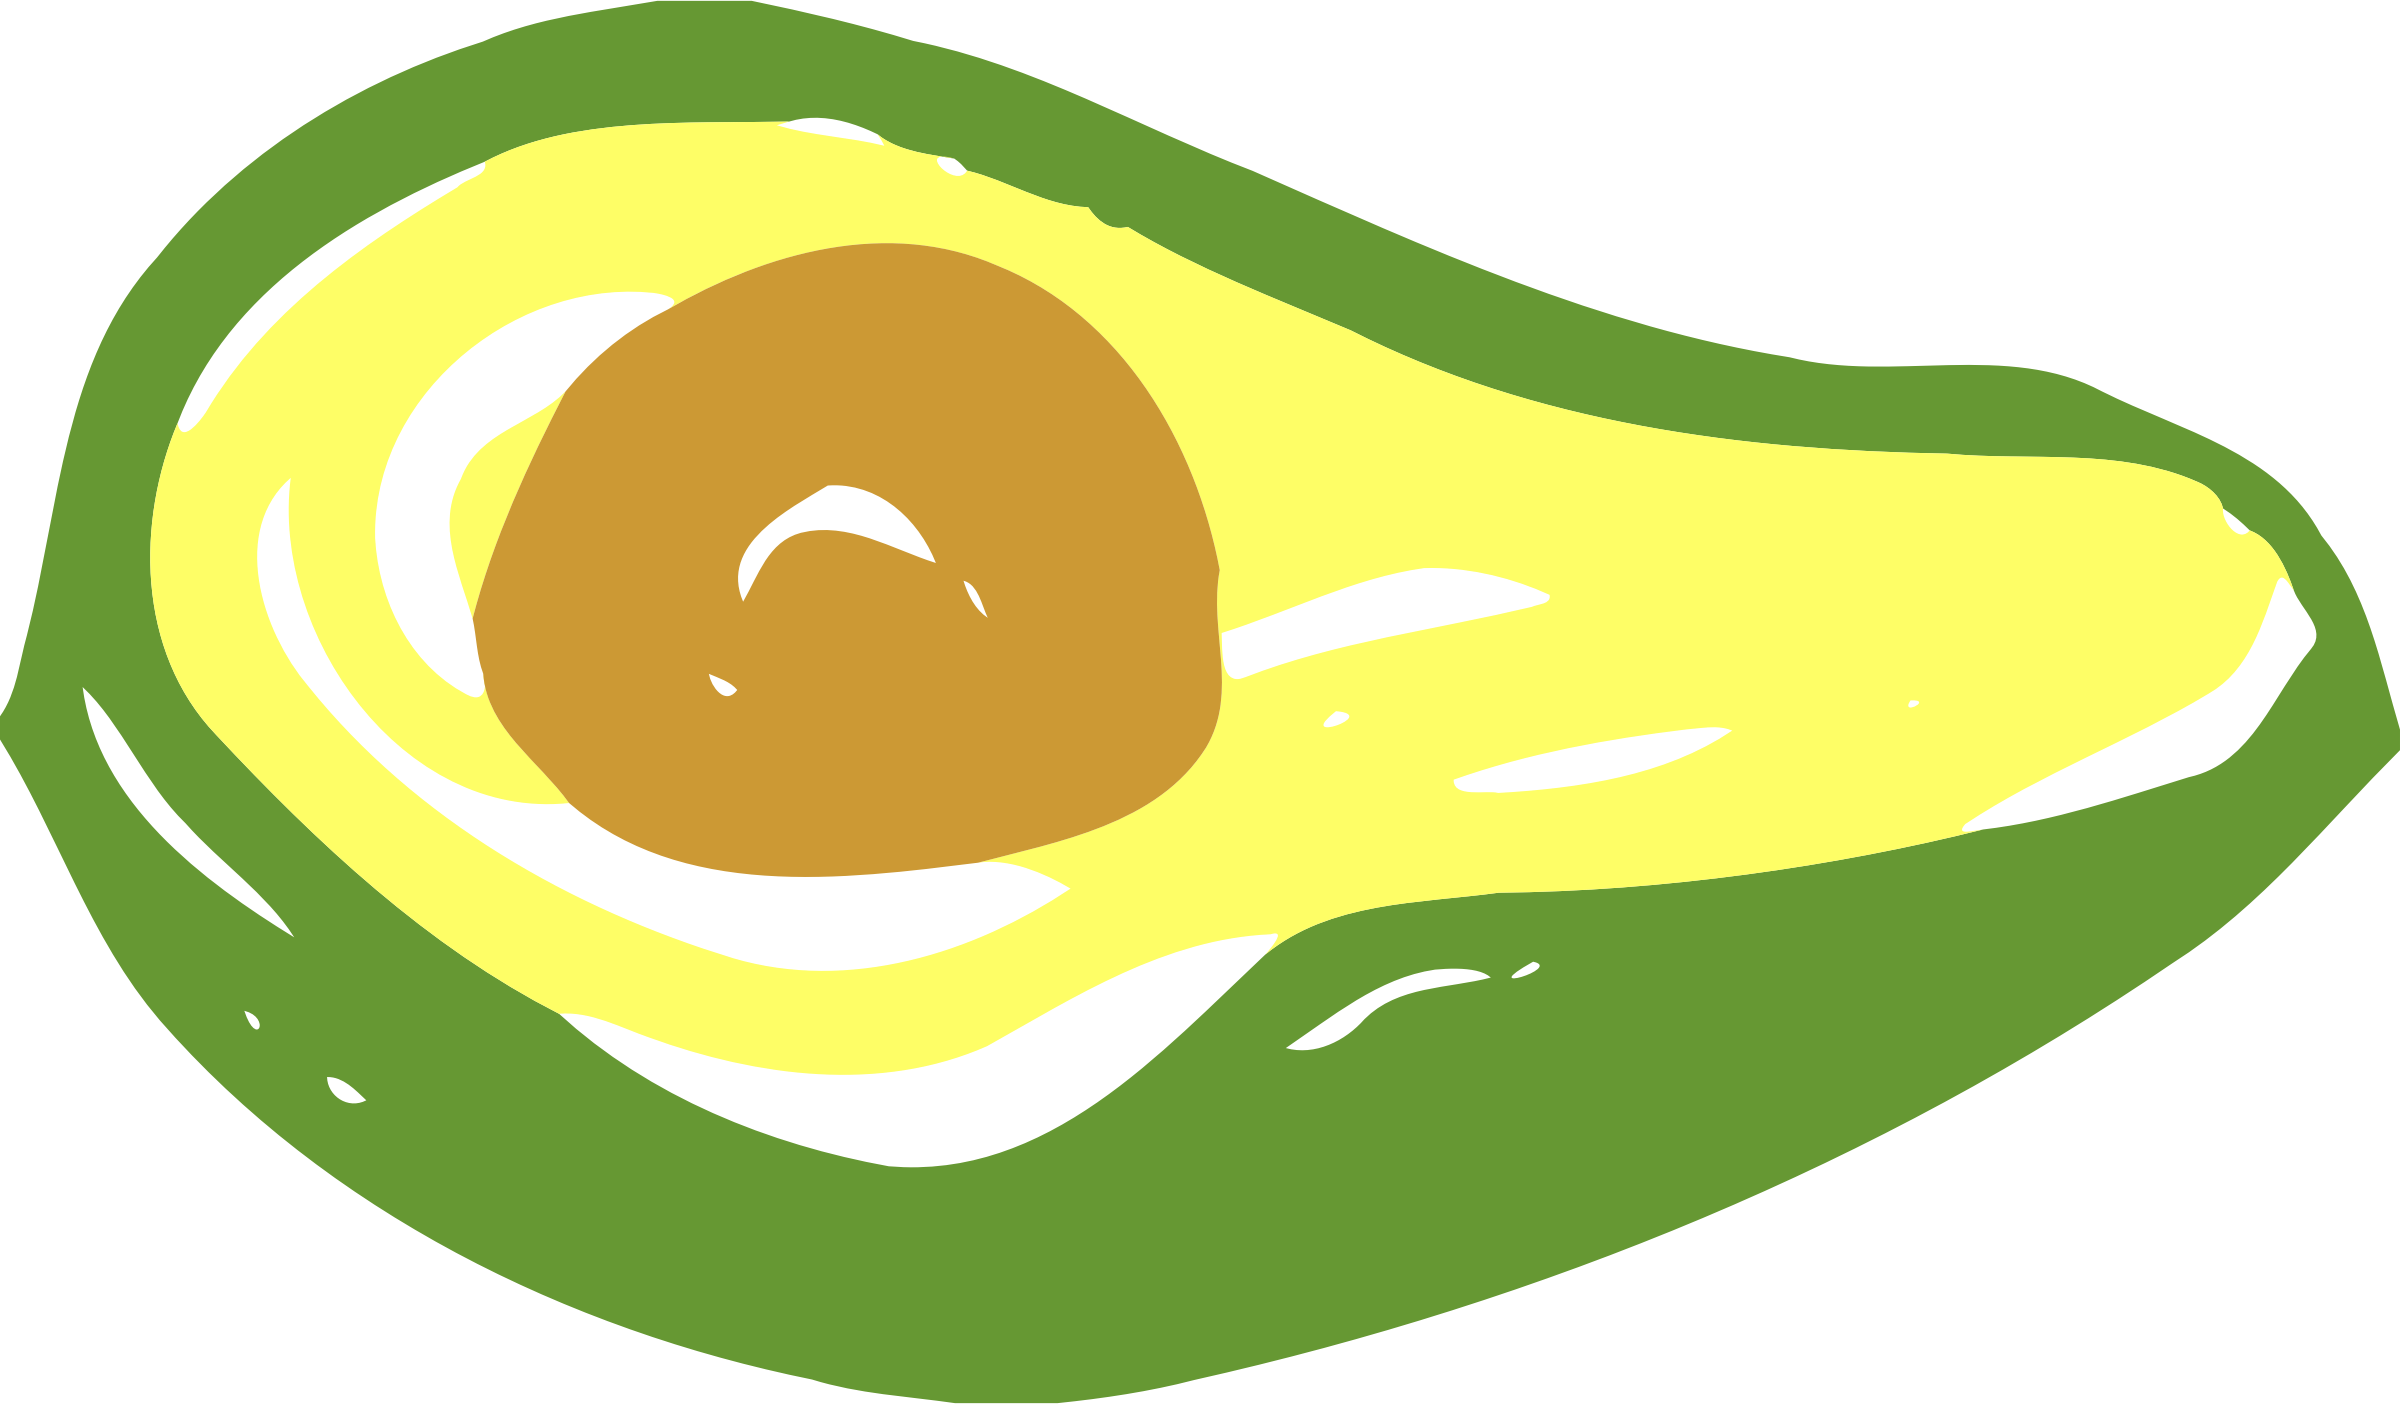 avocado clipart sketch